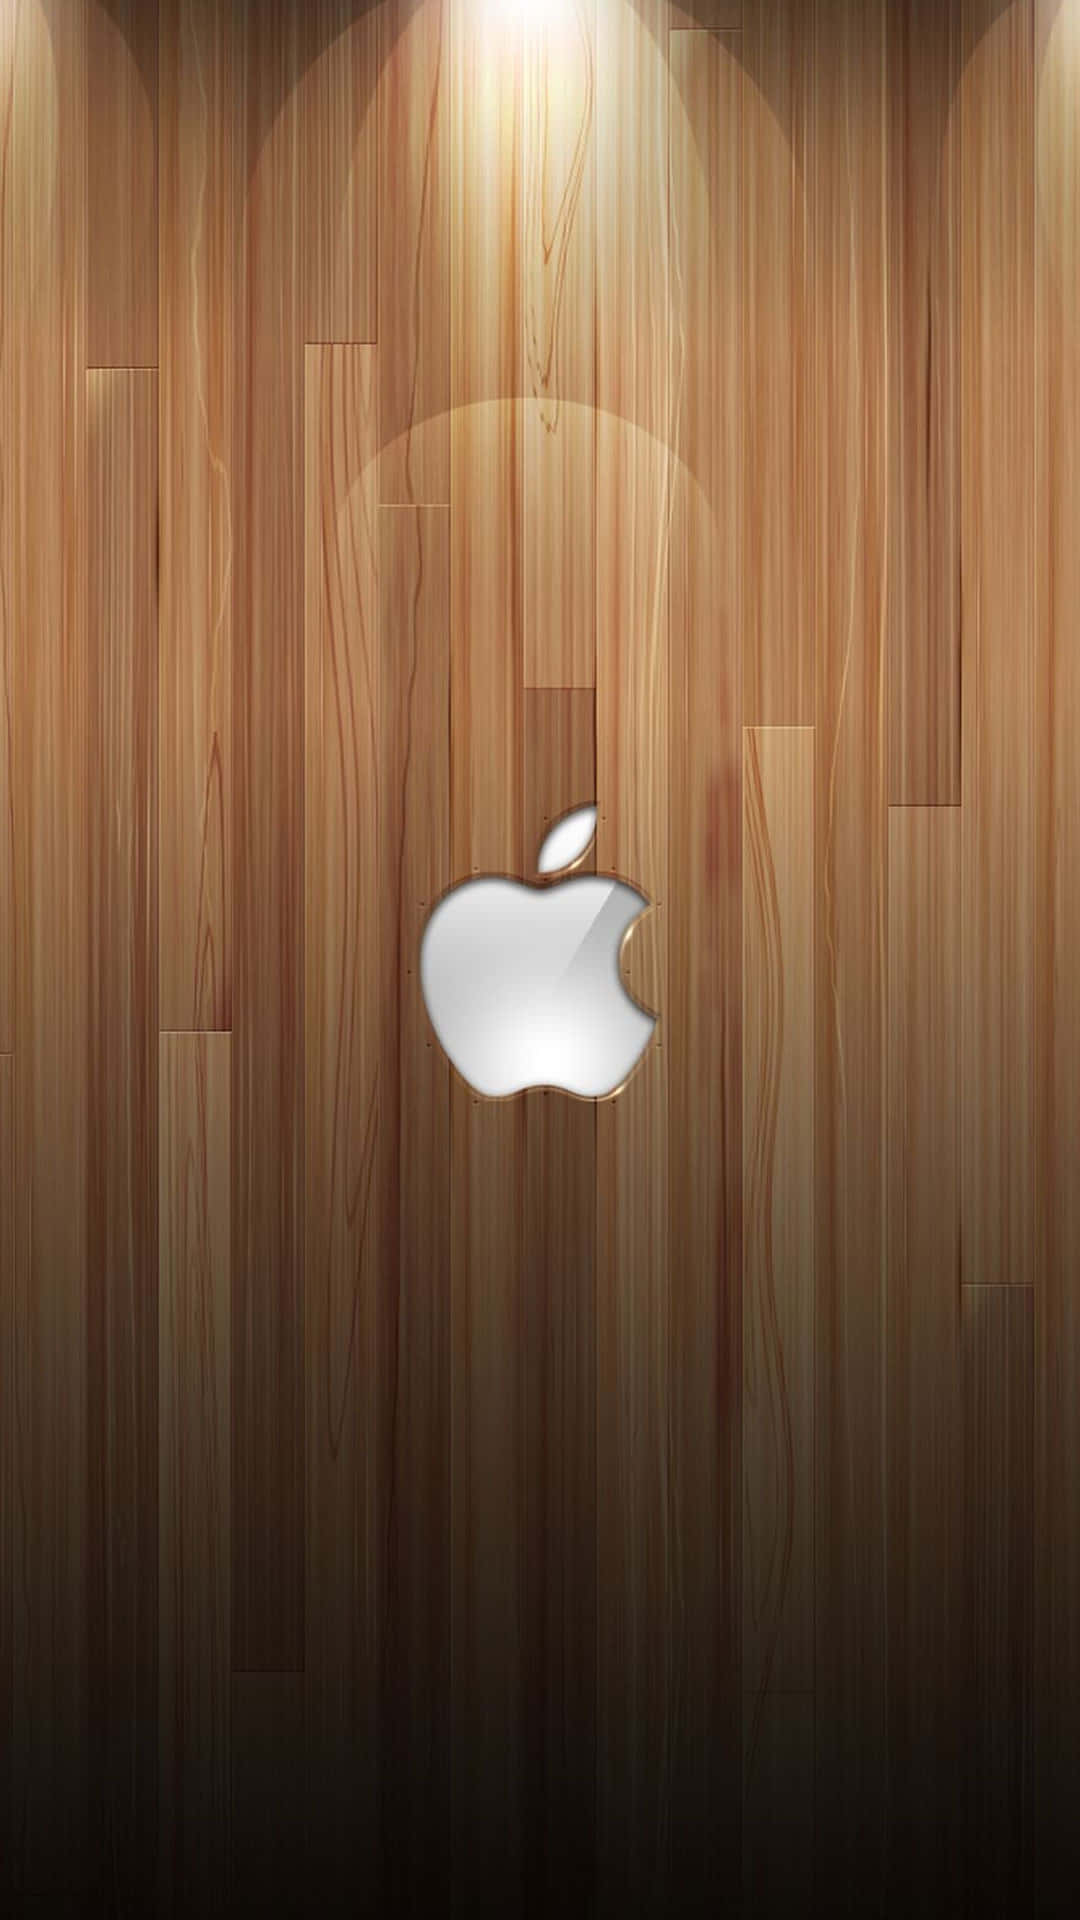 Holzartiges,fantastisches Apple Hd Iphone Wallpaper